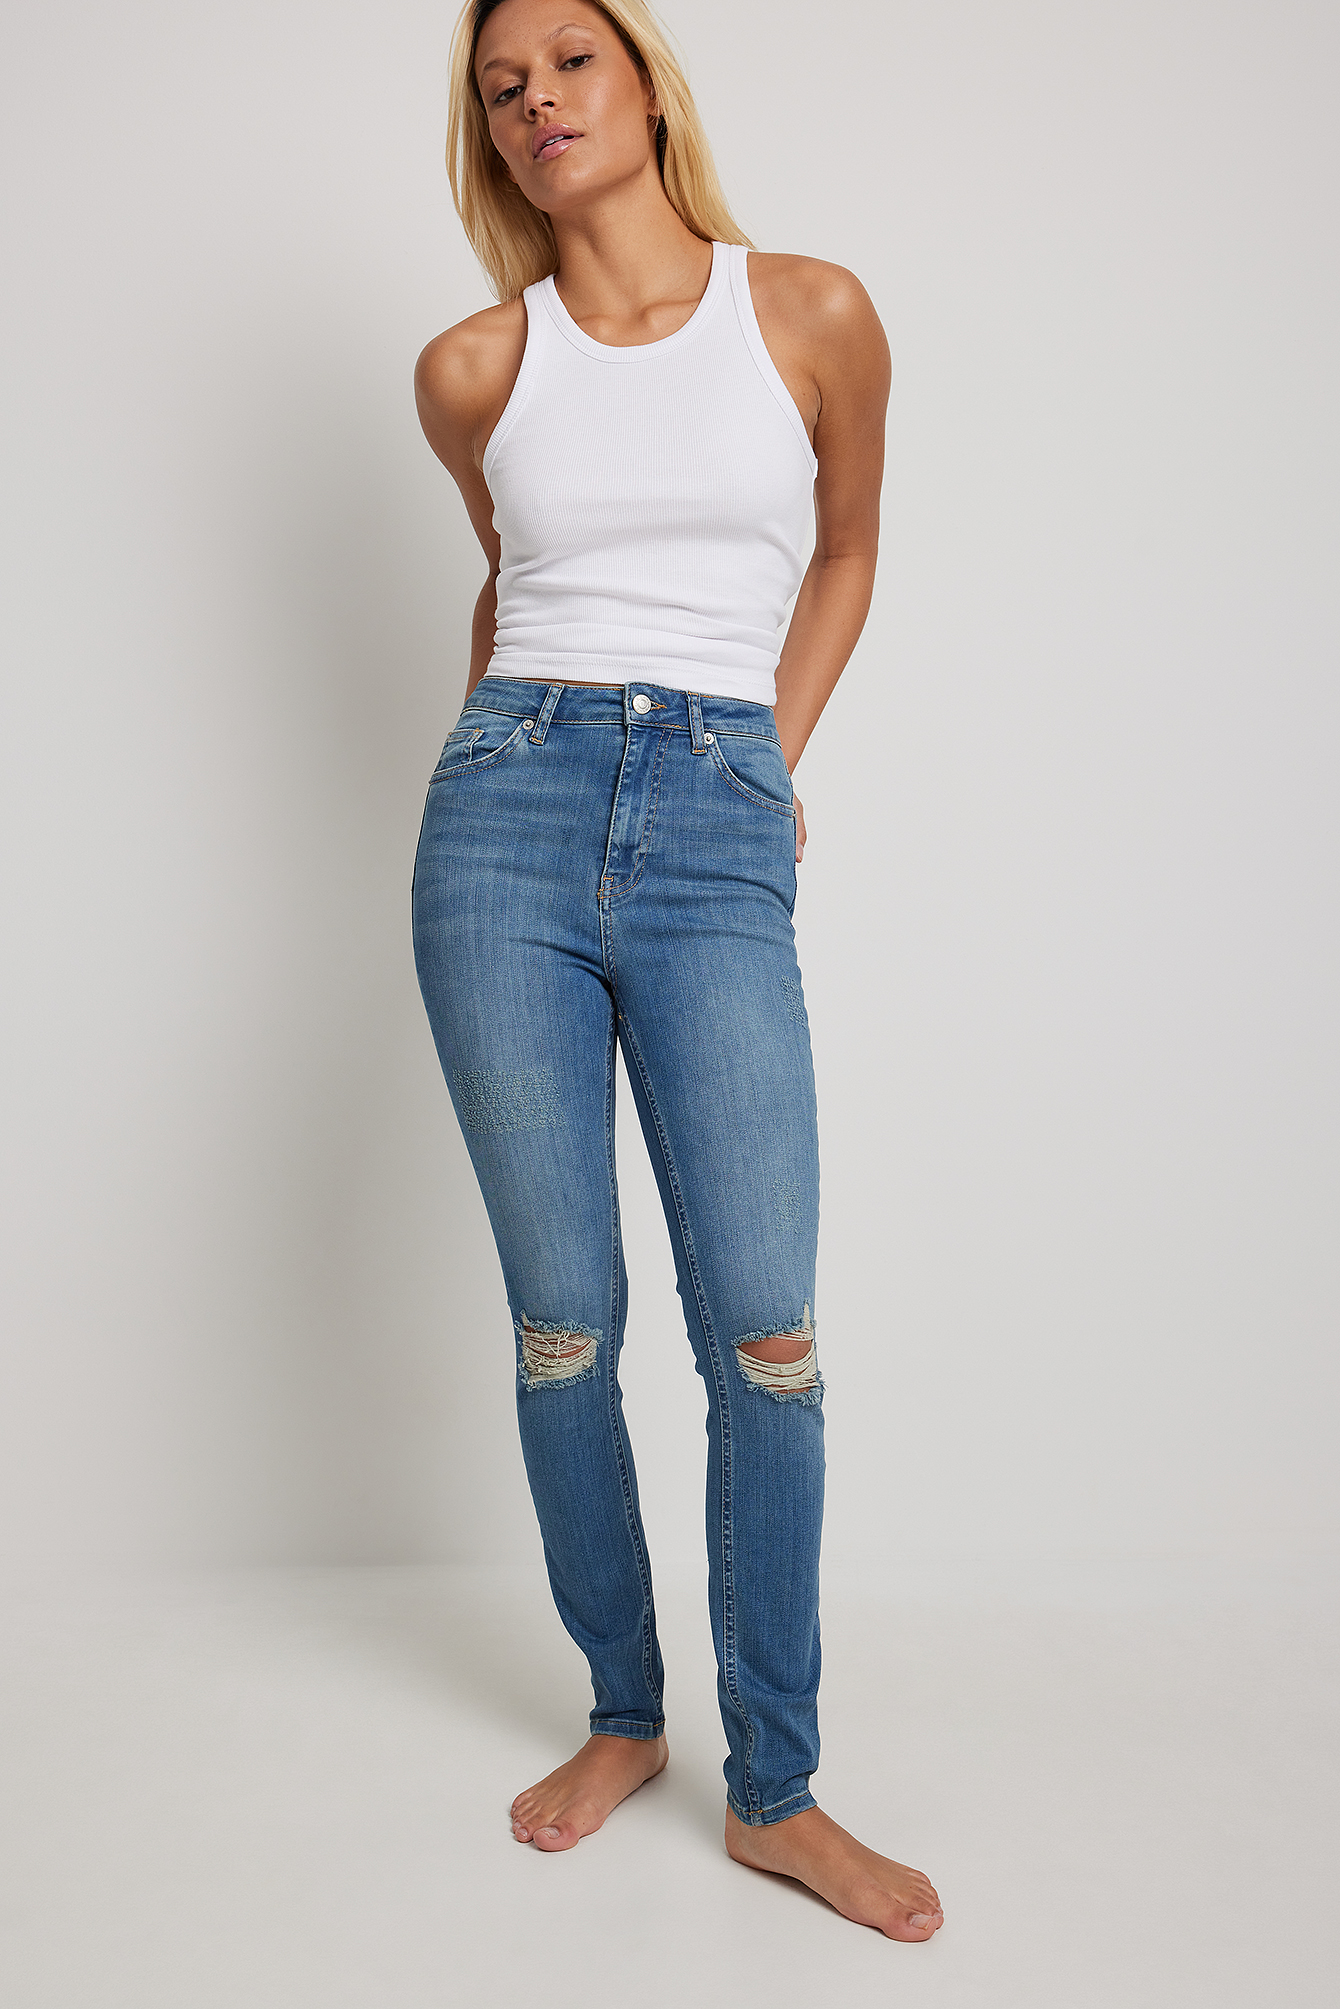 jeans • Dames ripped jeans online kopen | NA-KD